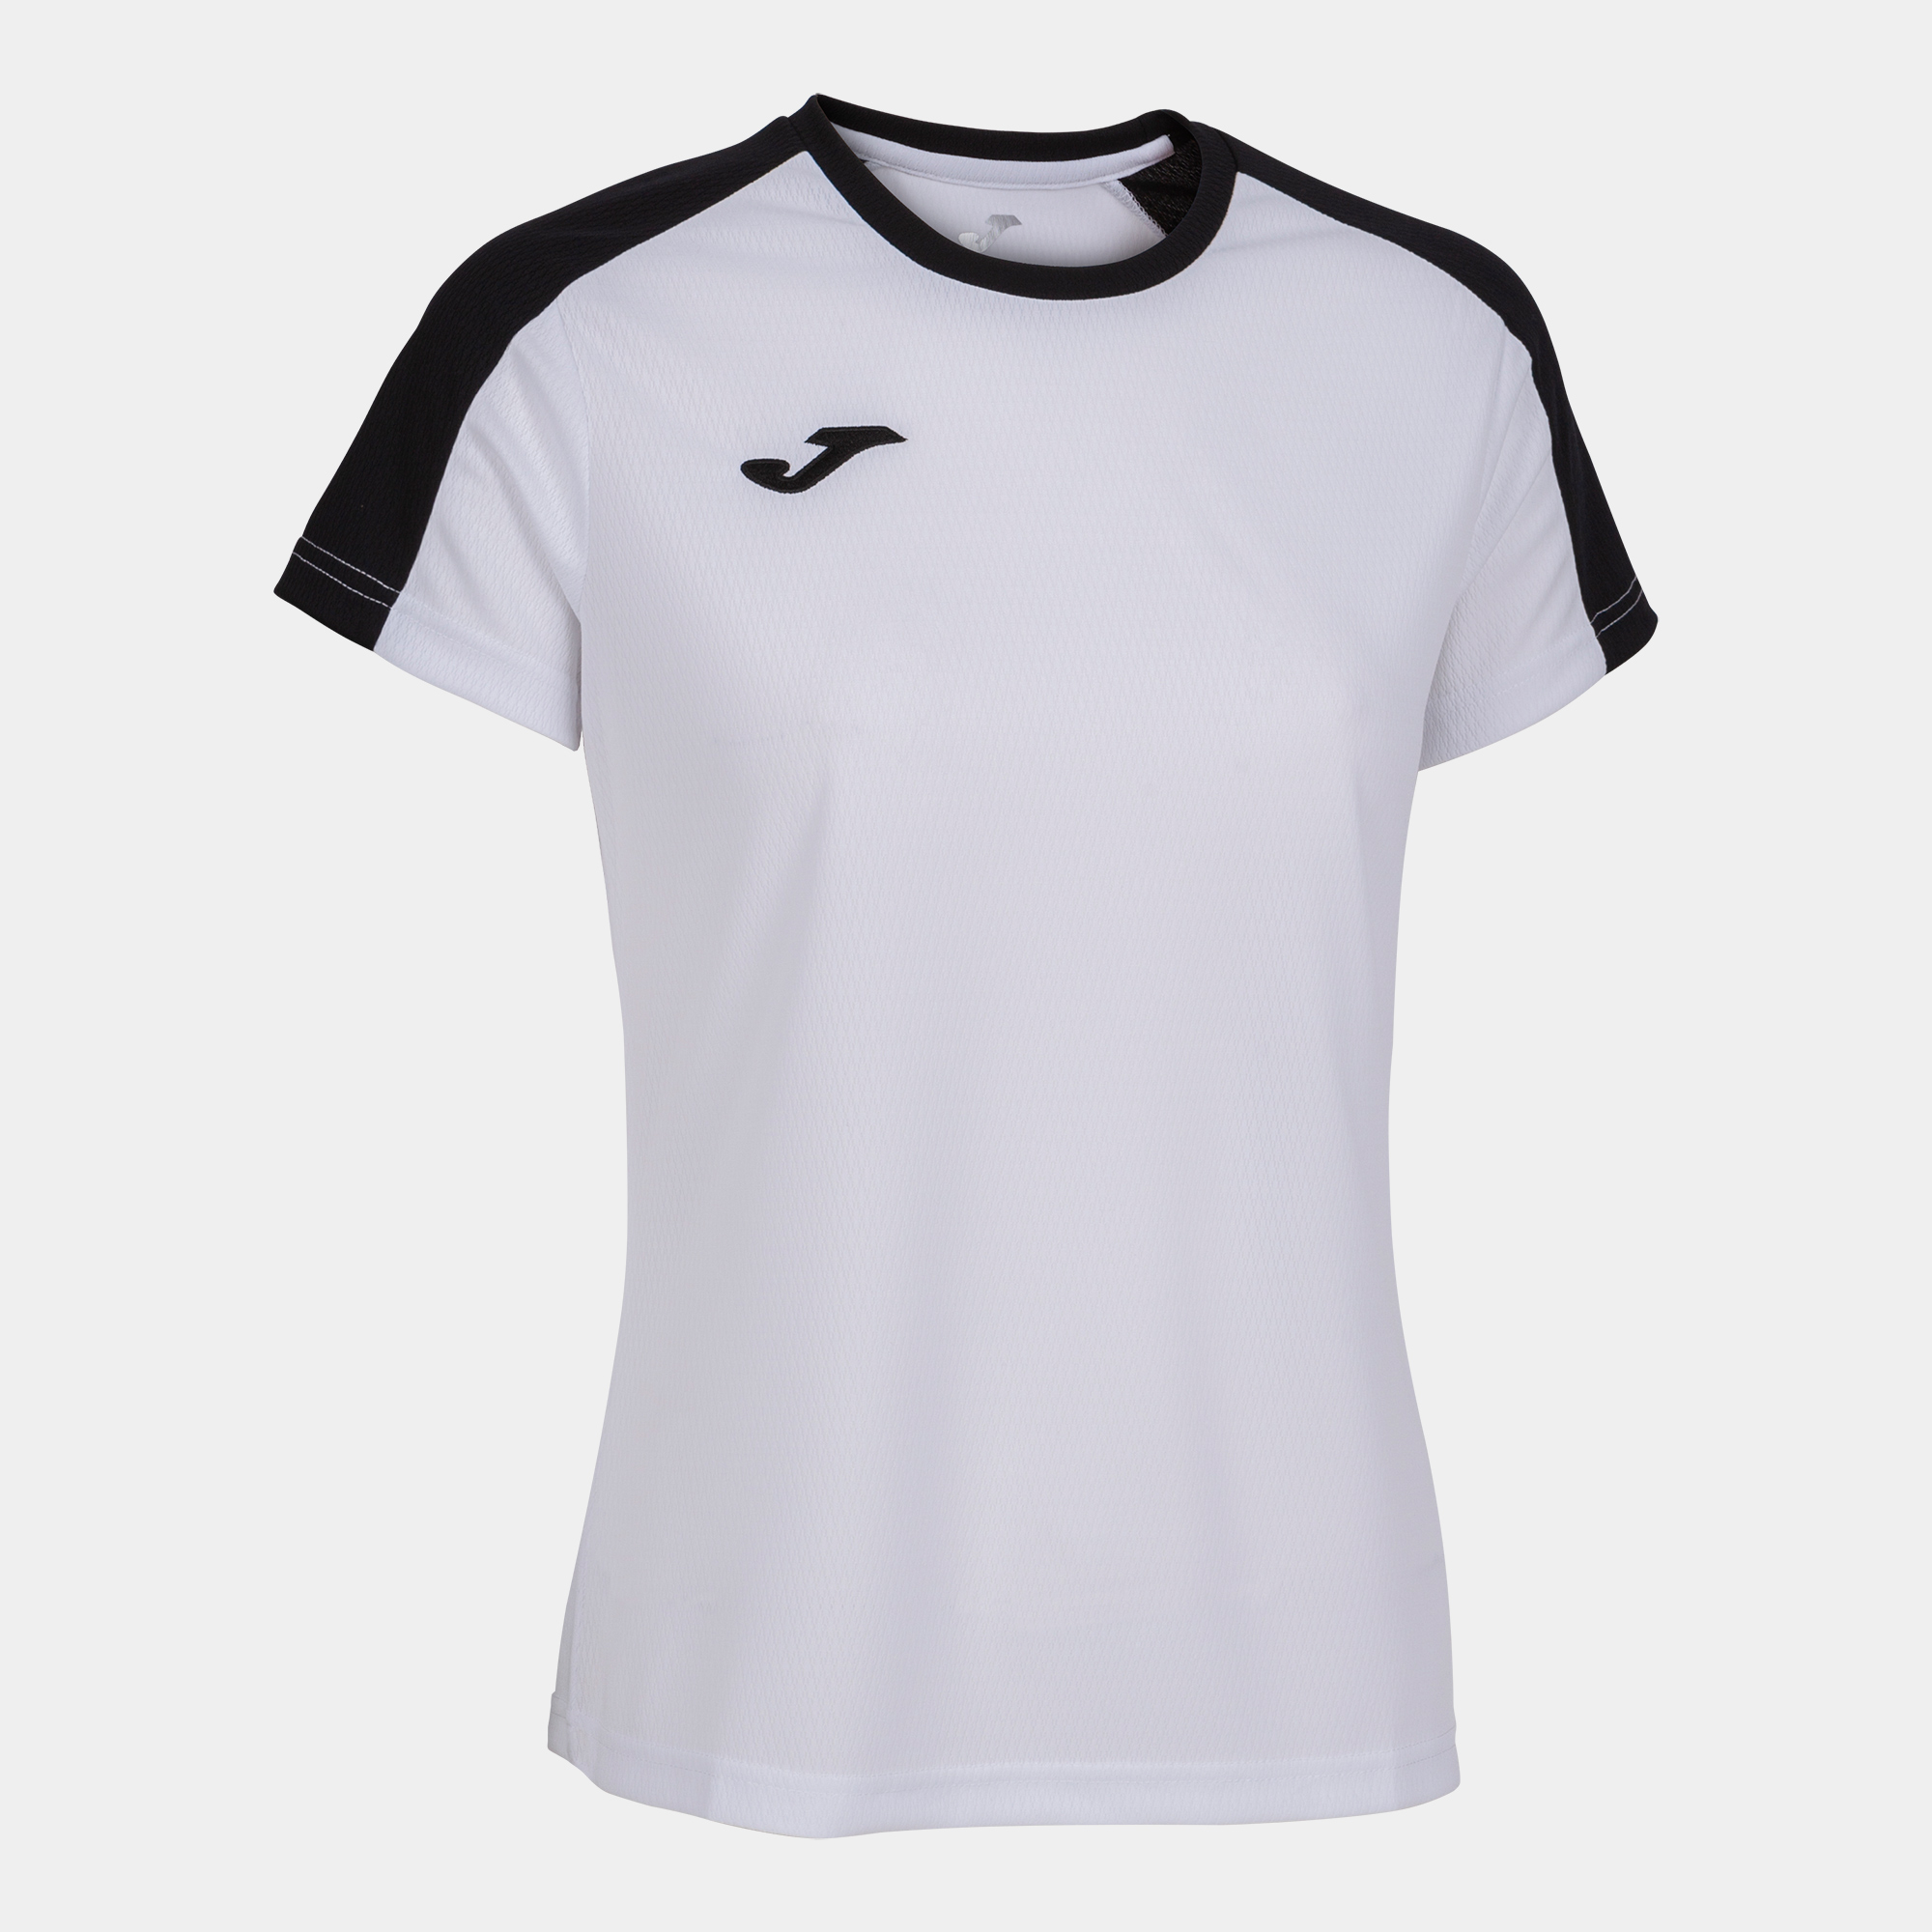 Camiseta negra y blanca Mamatayoe